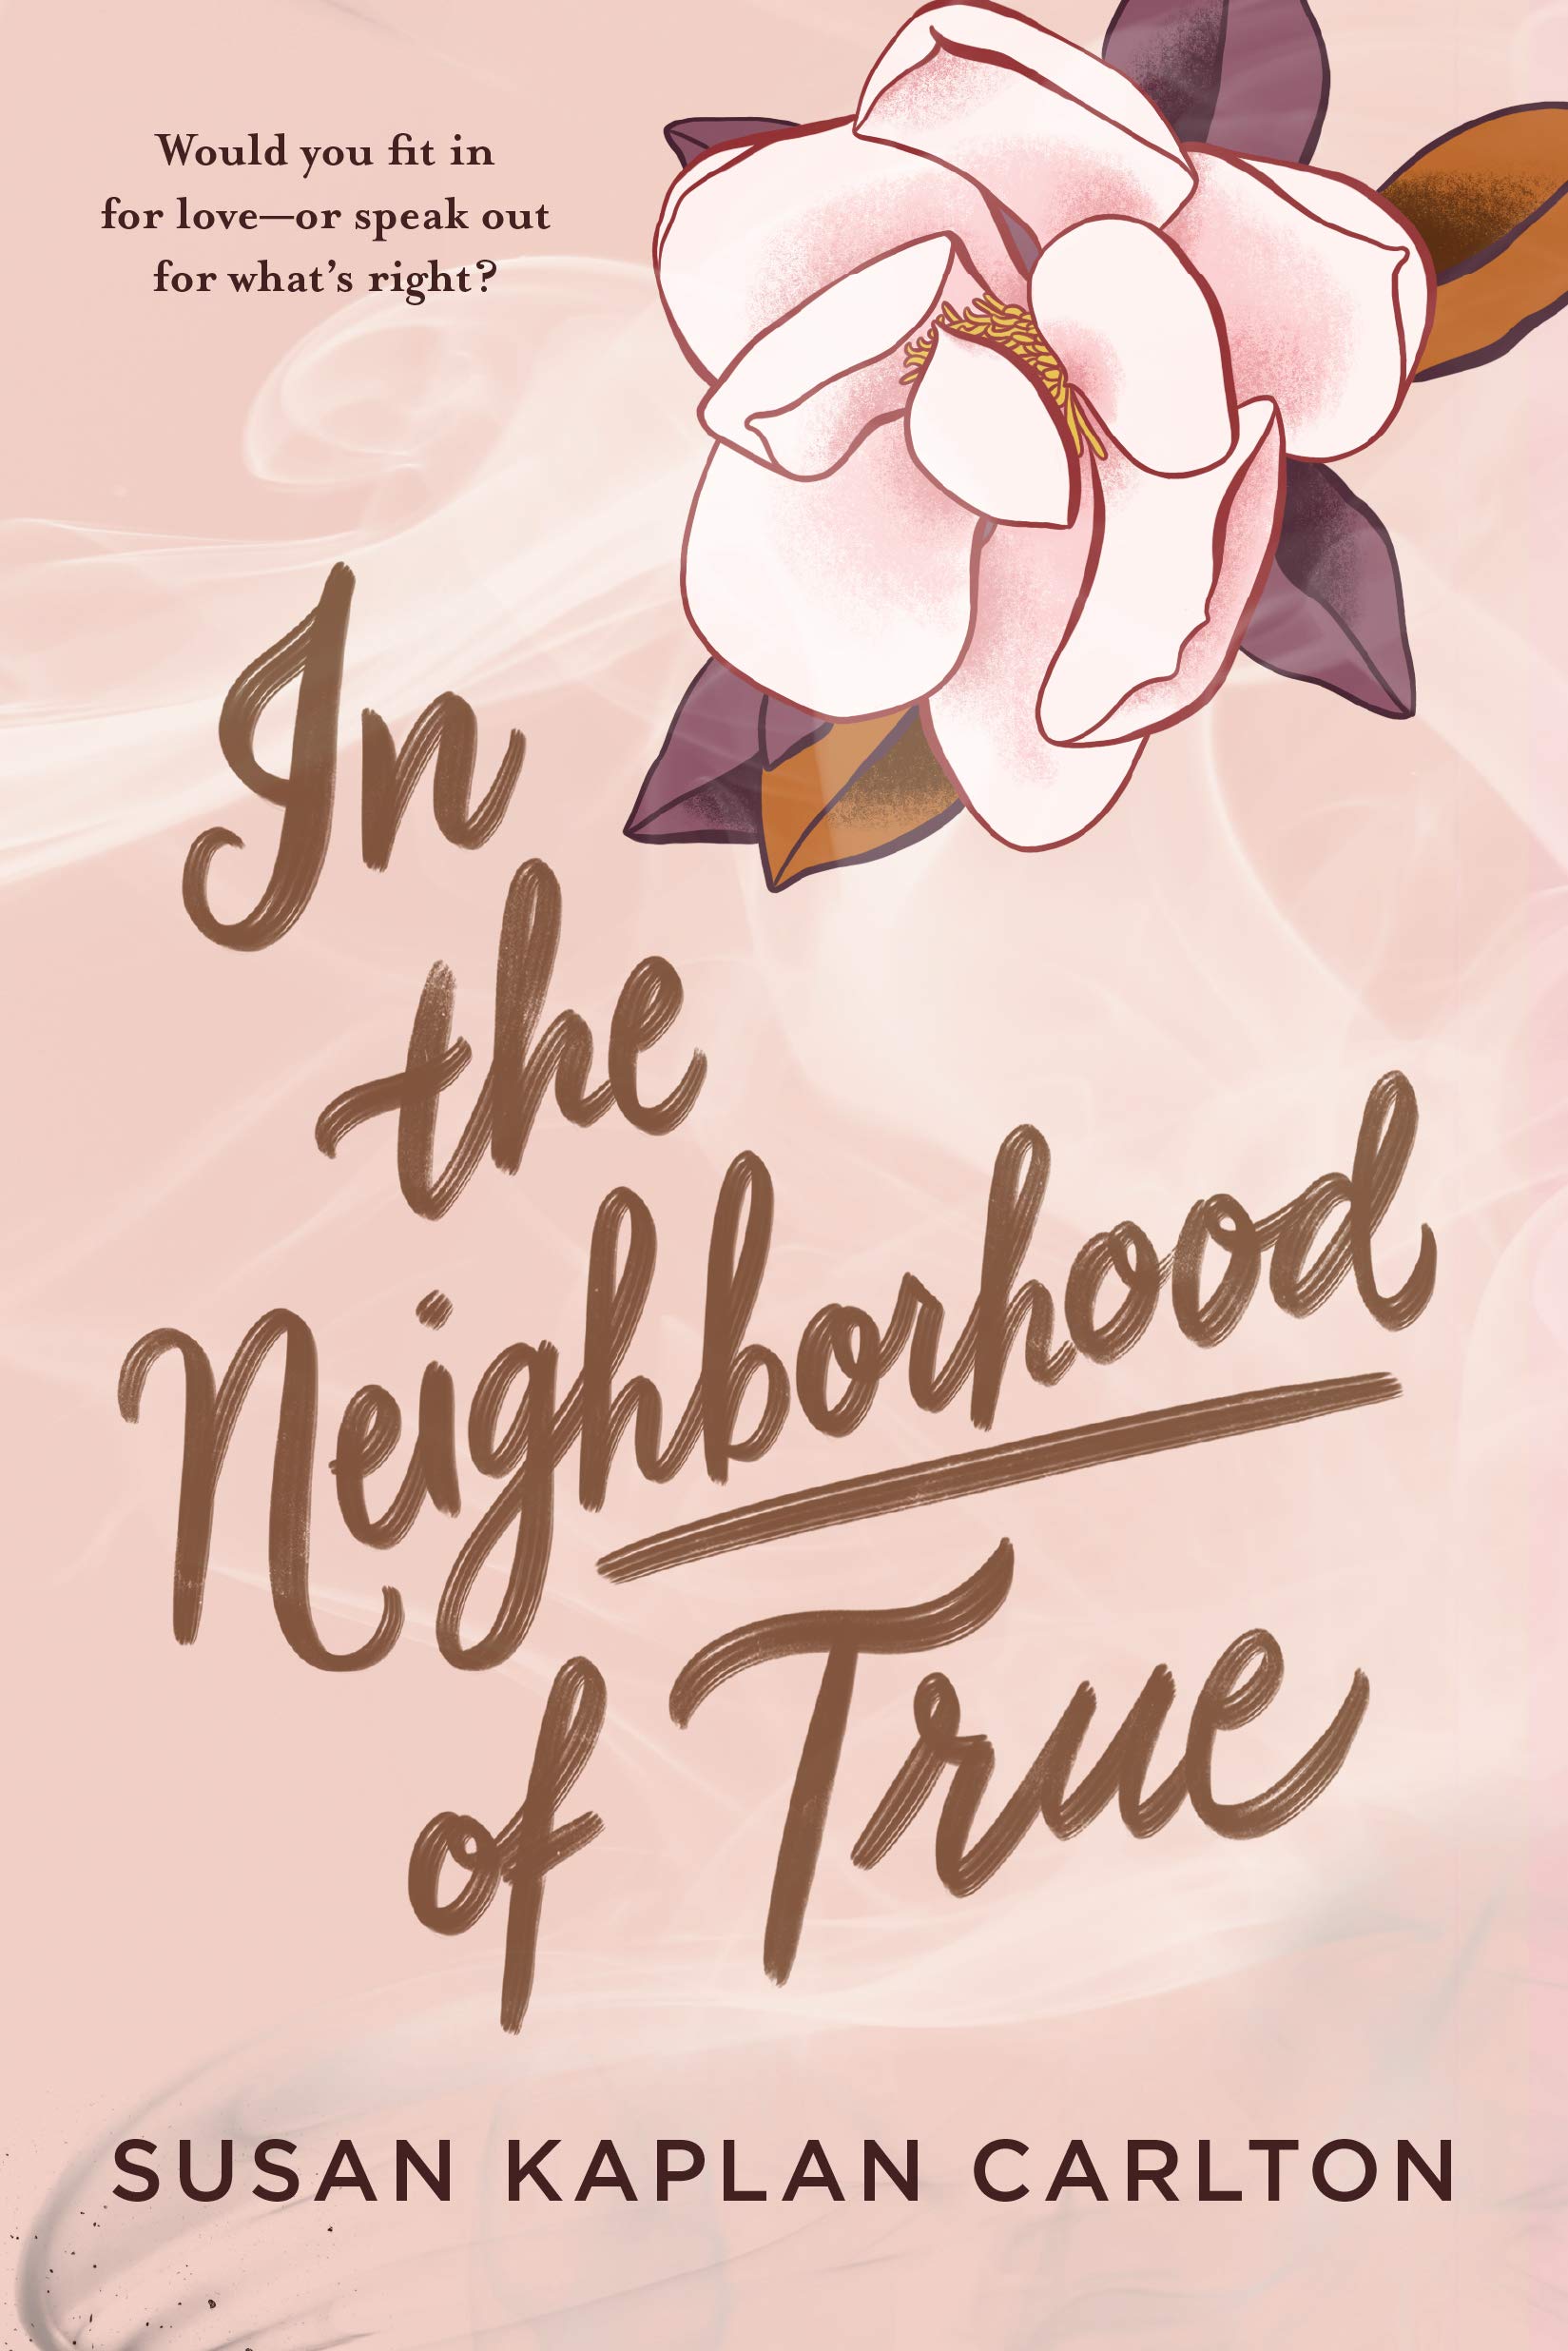 In the Neighborhood of True | Susan K Carlton